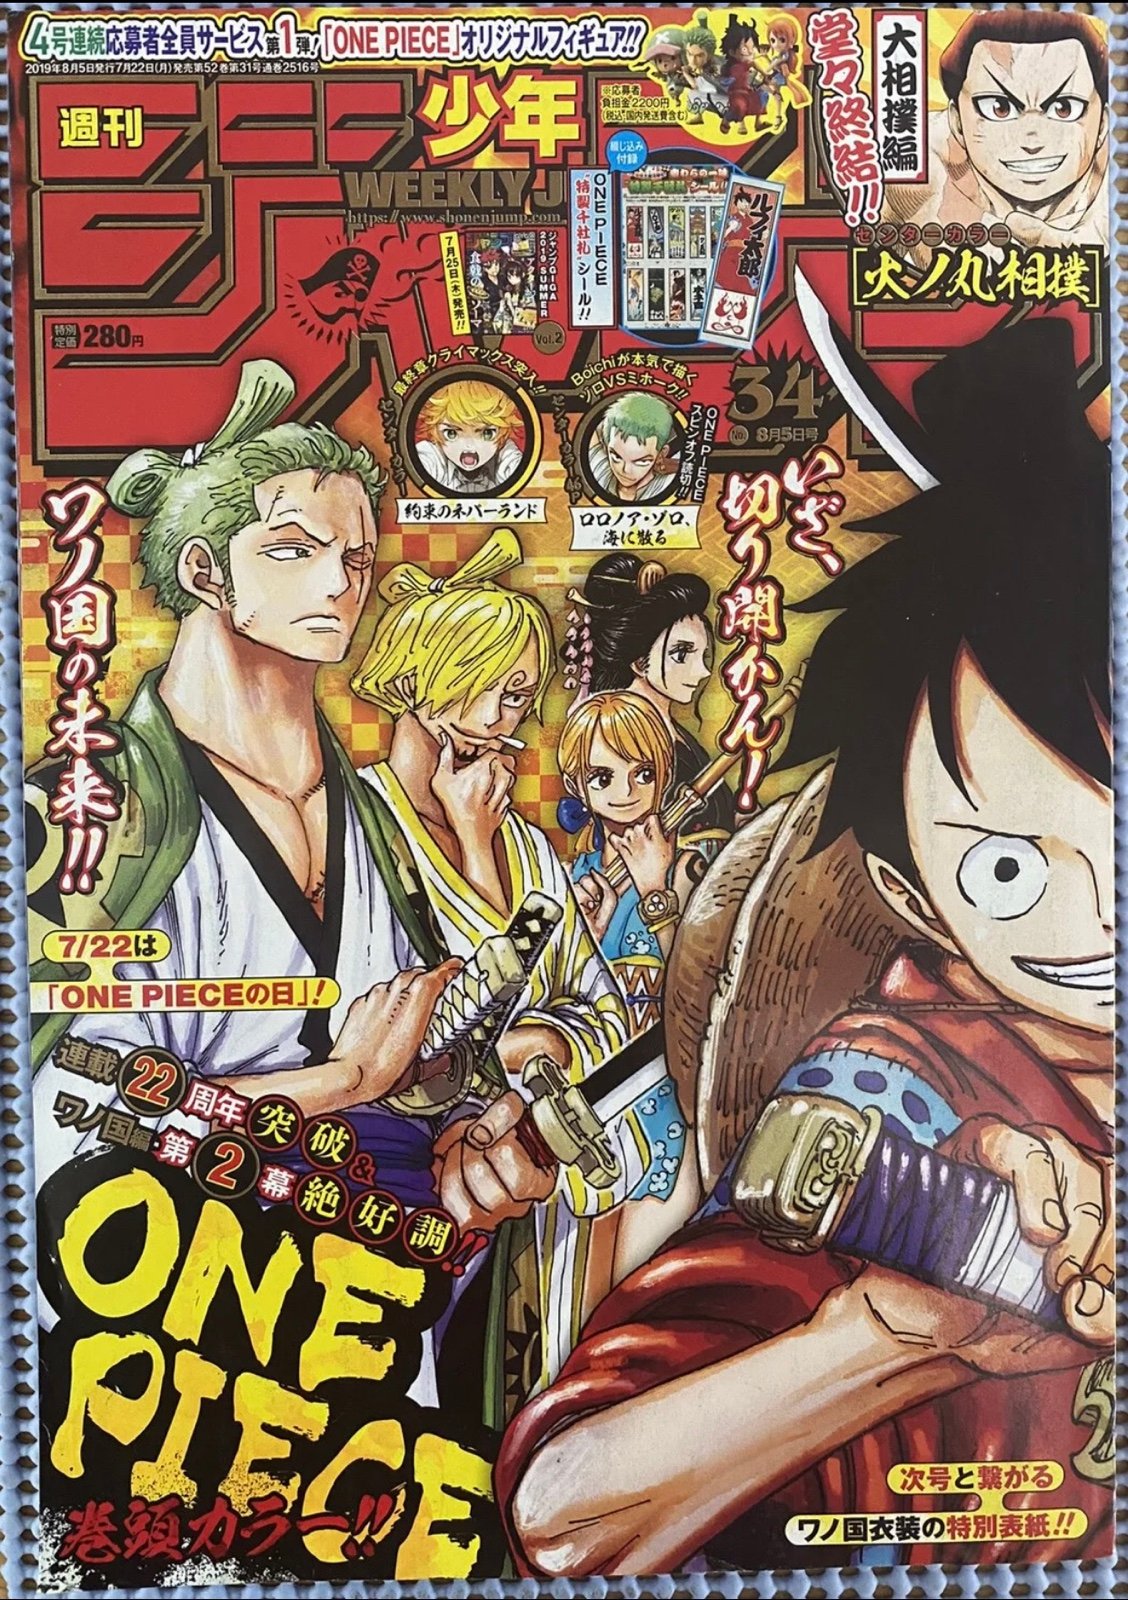 Weekly Shonen Jump No. 34 2019 One Piece Final Chap Hinomaru Zumo Manga Magazine abMEmrESY